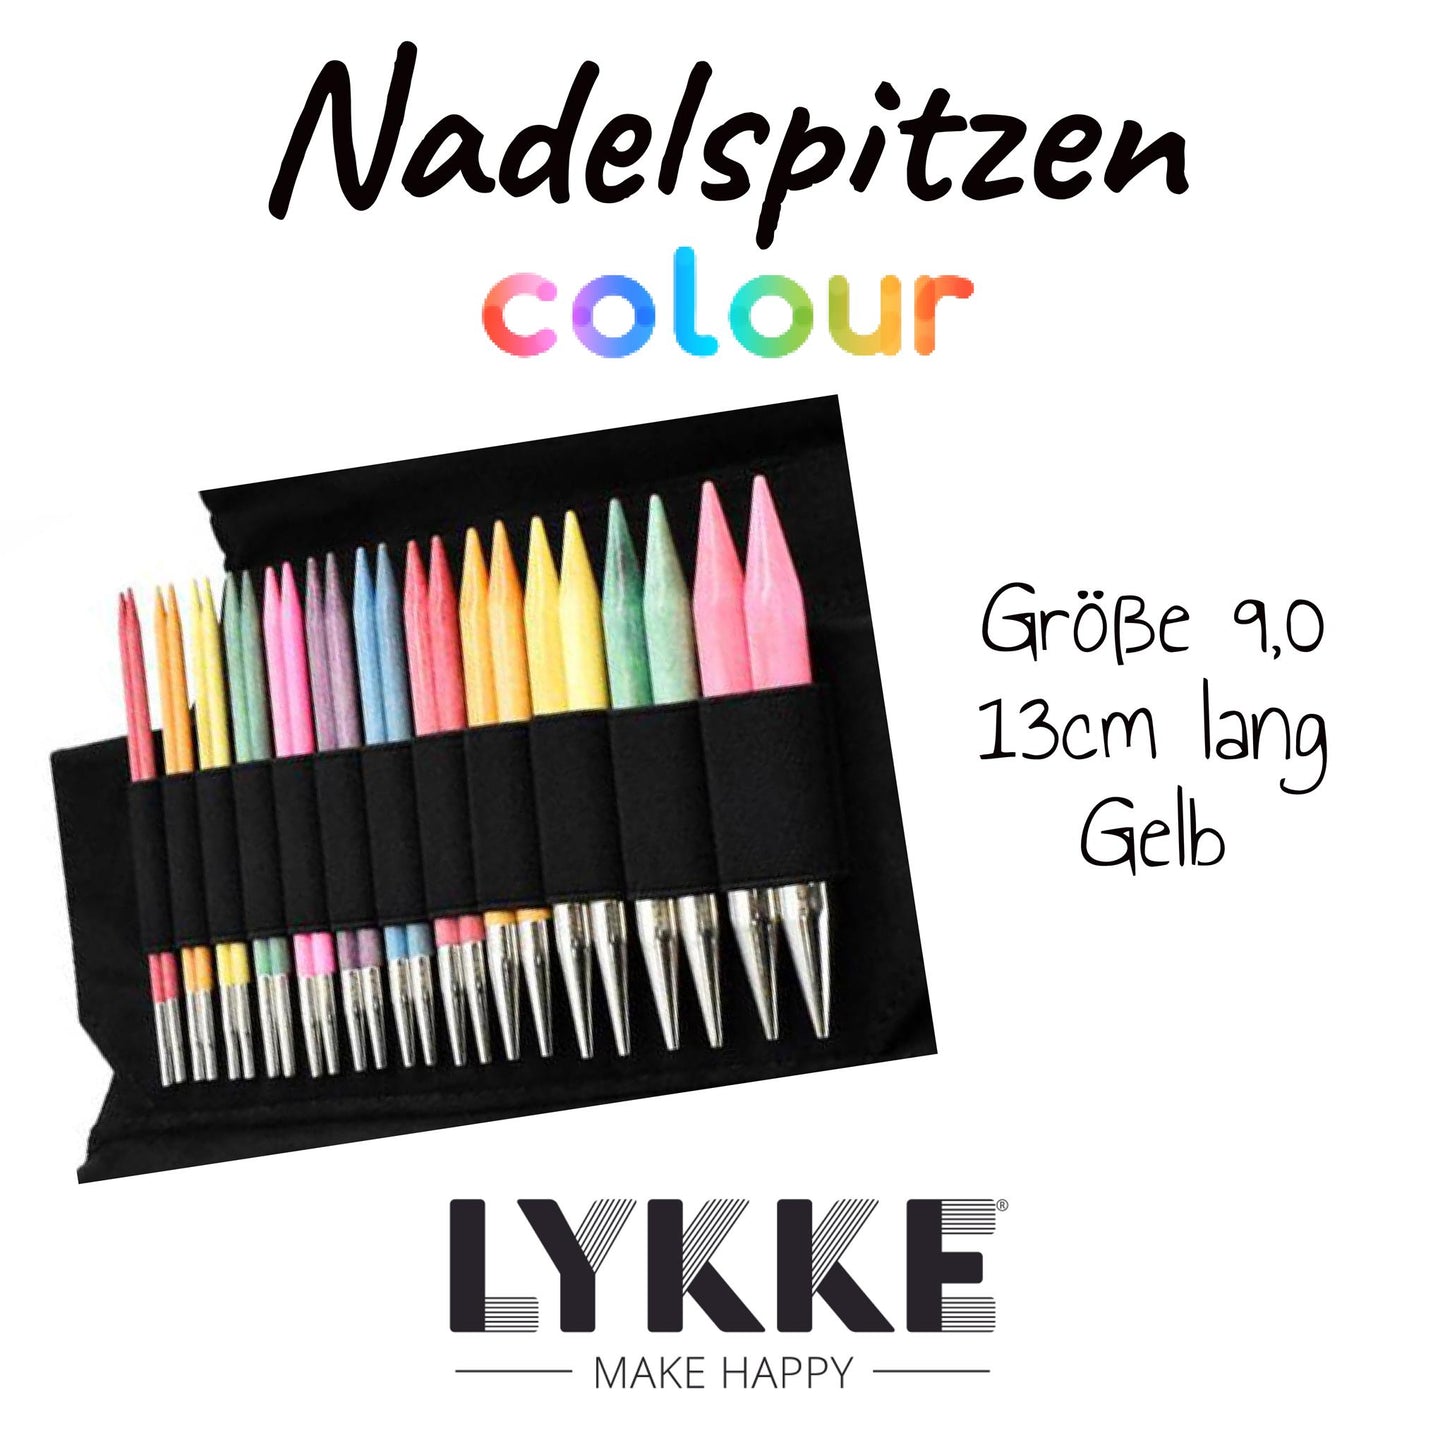 Lykke Stricknadelspitze Colour, 9,0, Birkenholz farbig, 15005200